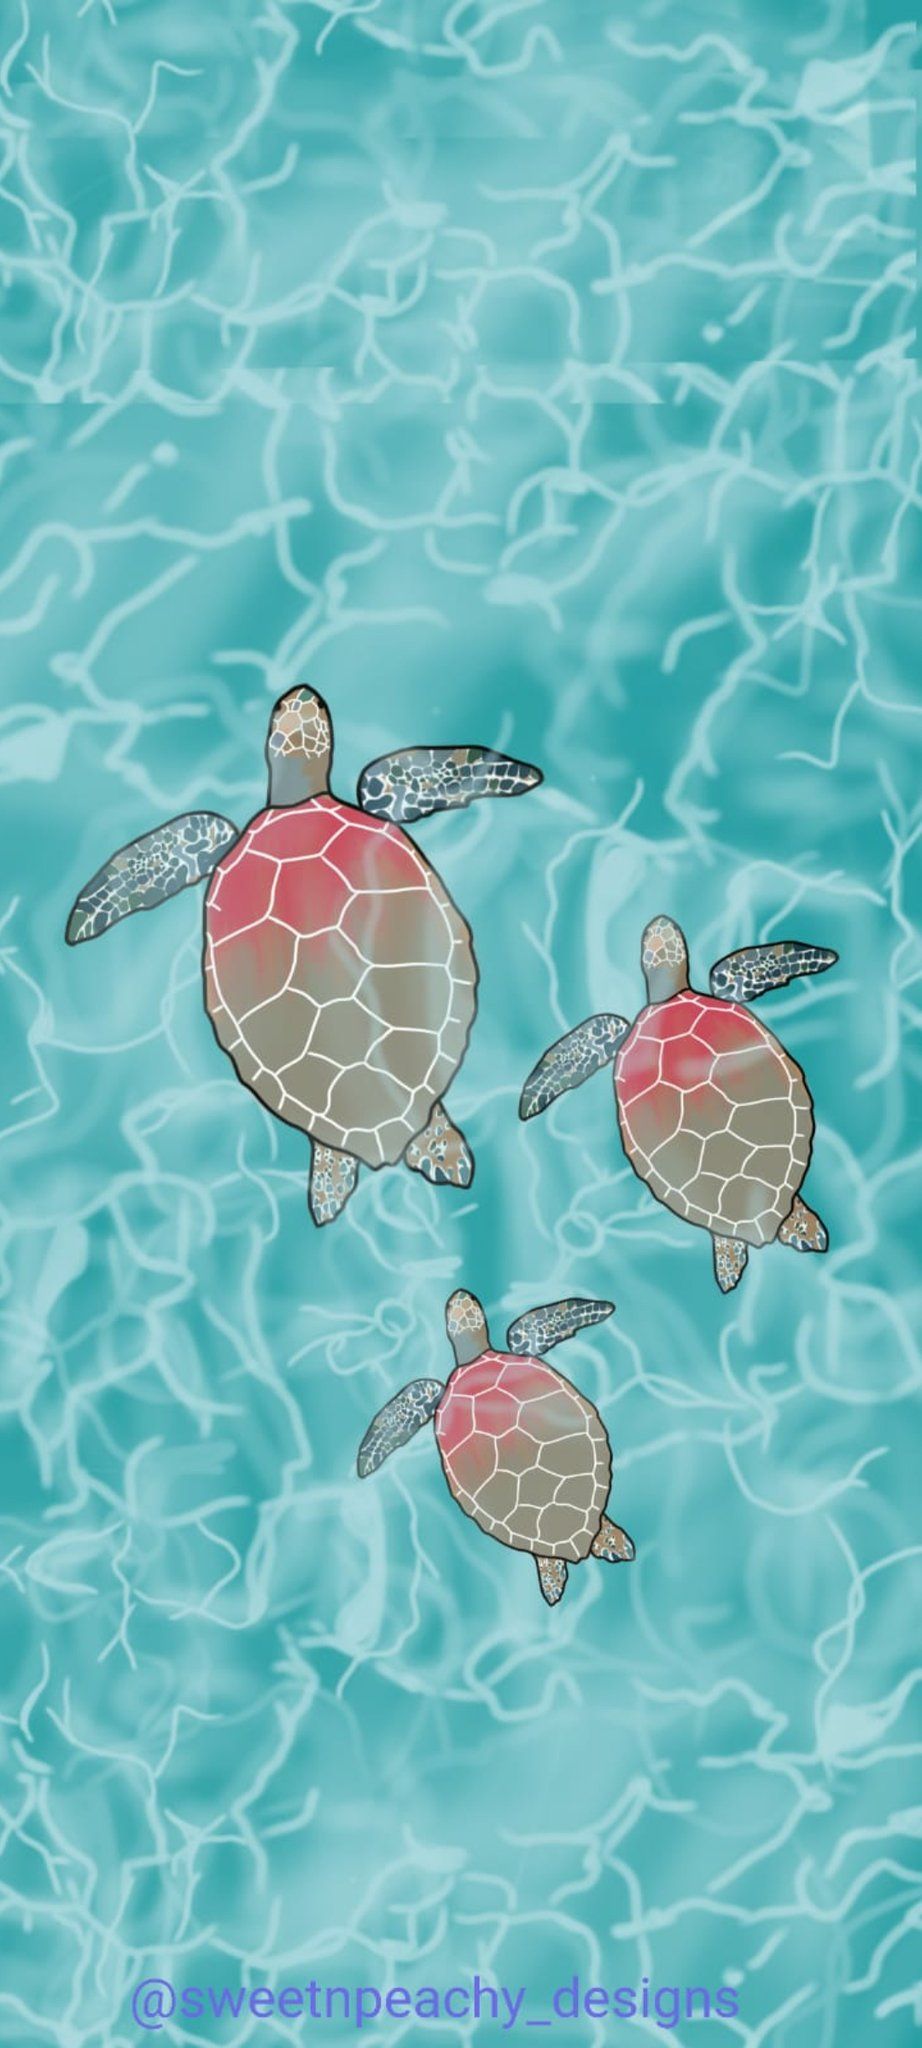 Sweet N Peachy Designs is another adorable under water wallpaper with 3 gorgeous sea turtles in swimming in the ocean. #vscogirl #endangeredspecies #moreawareness #underthesea #underwater #seaturtles